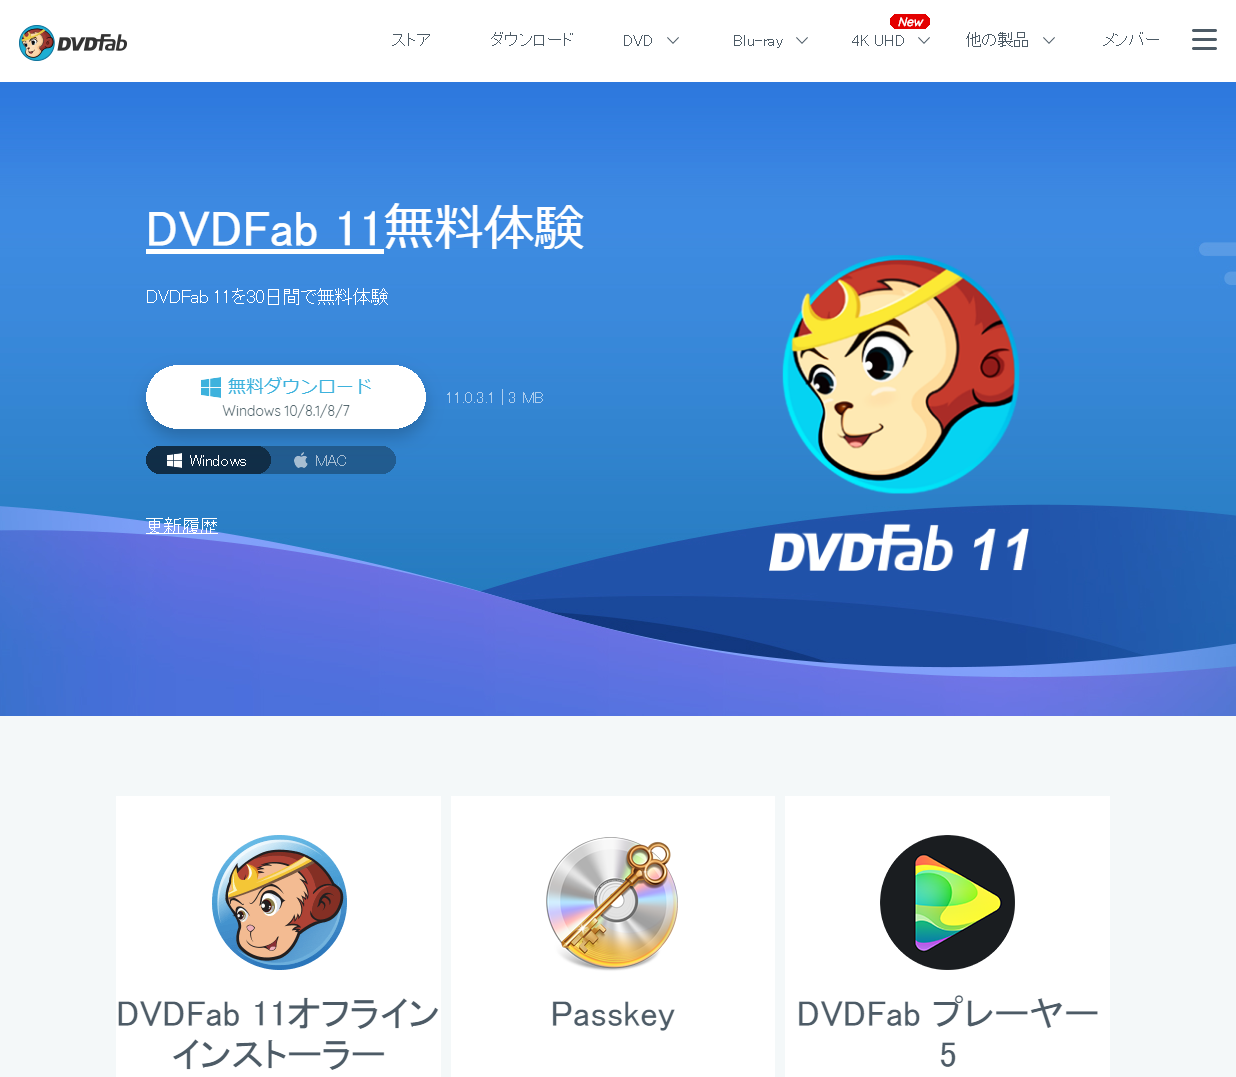 DVDFab XI プレミアム for Mac パッケージ版